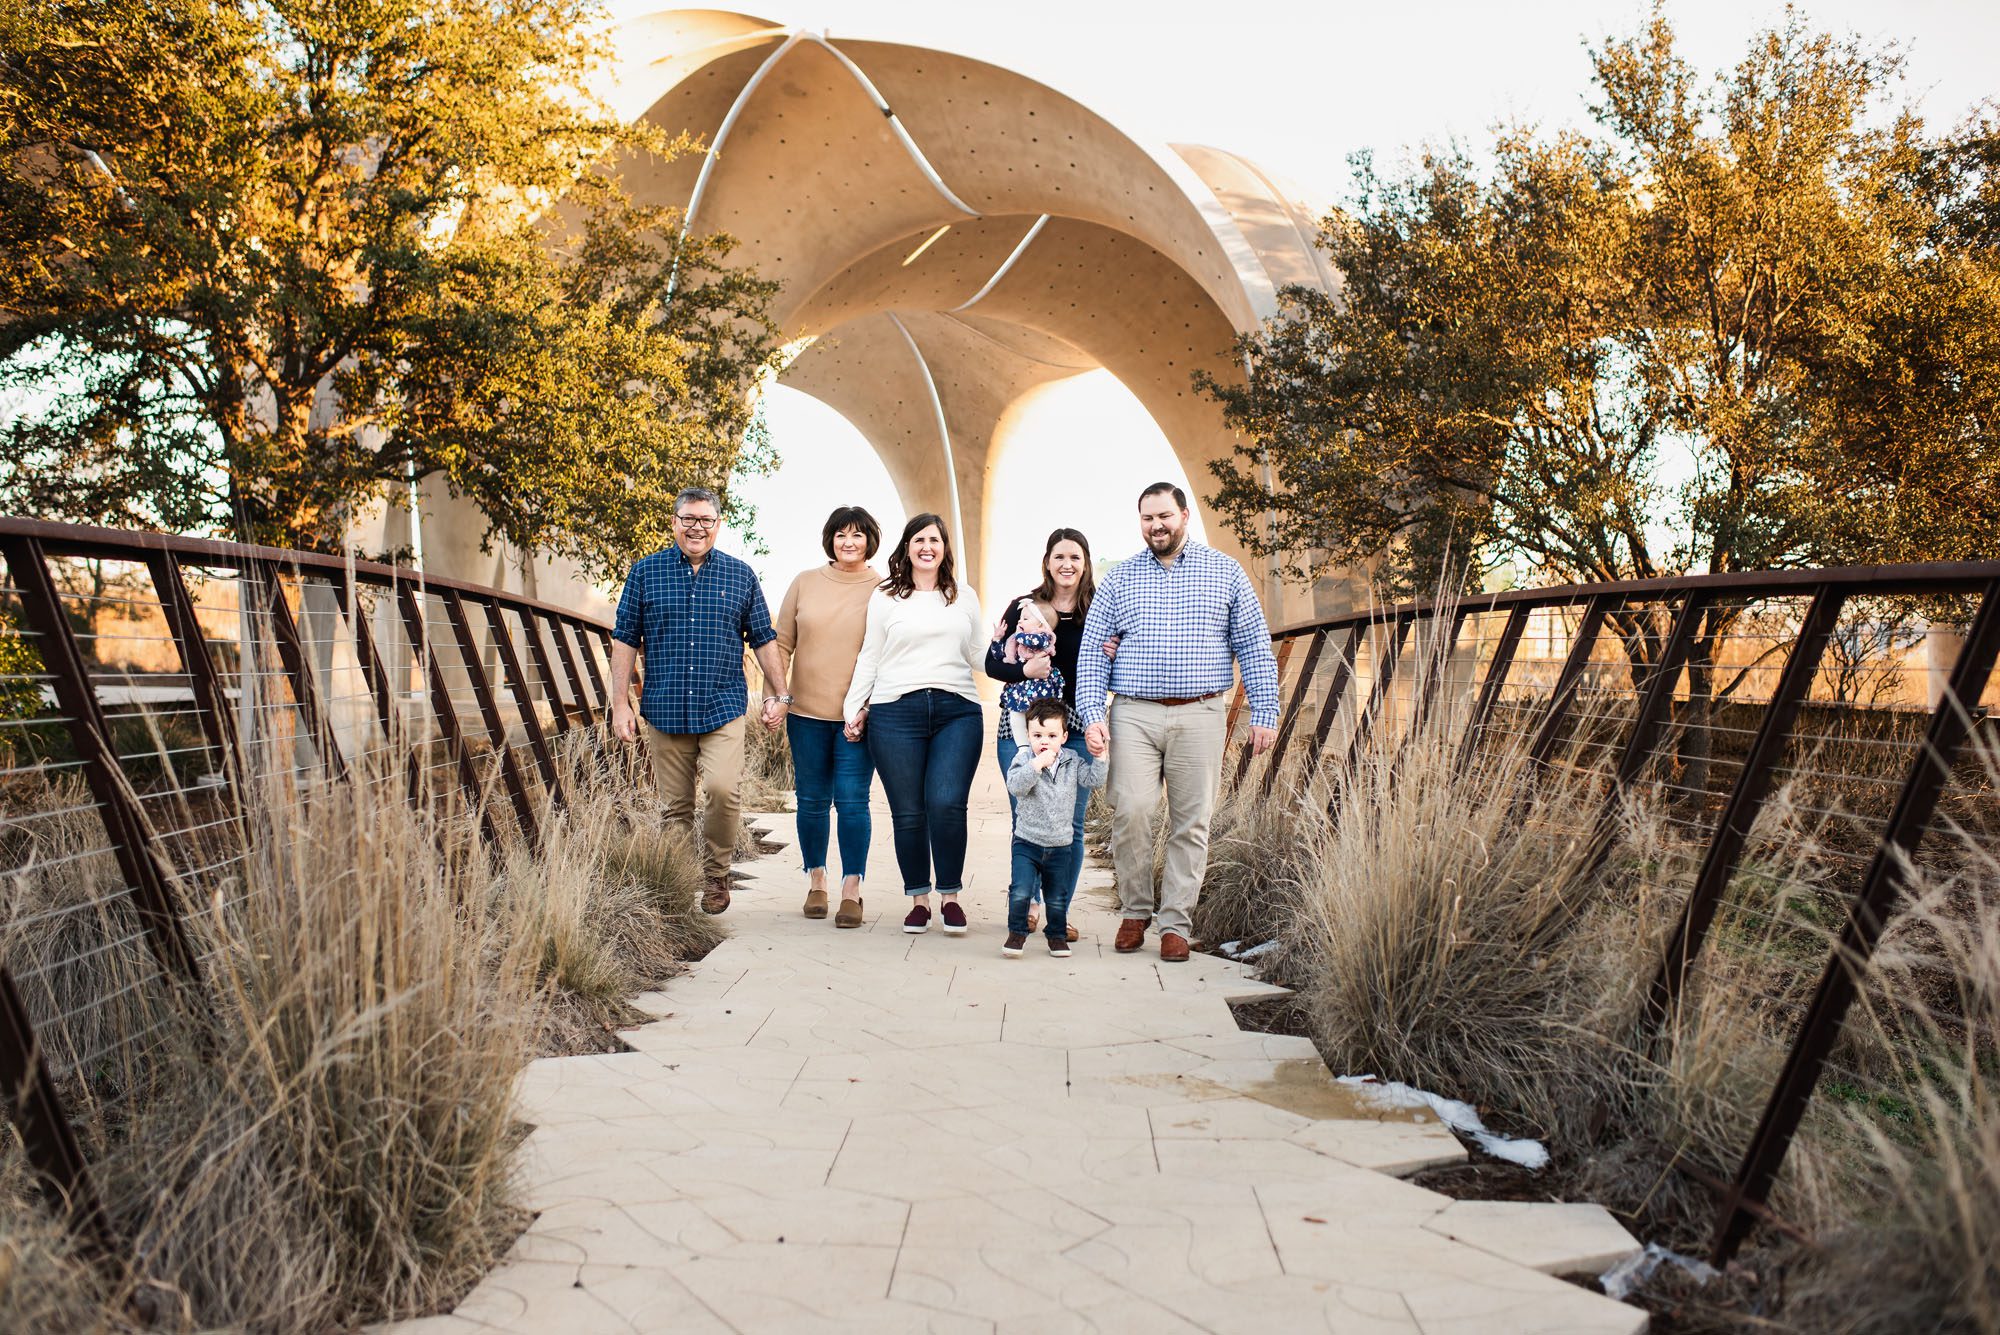 Family walking on bridge with archway behind them, Lifestyle Photographer San Antonio